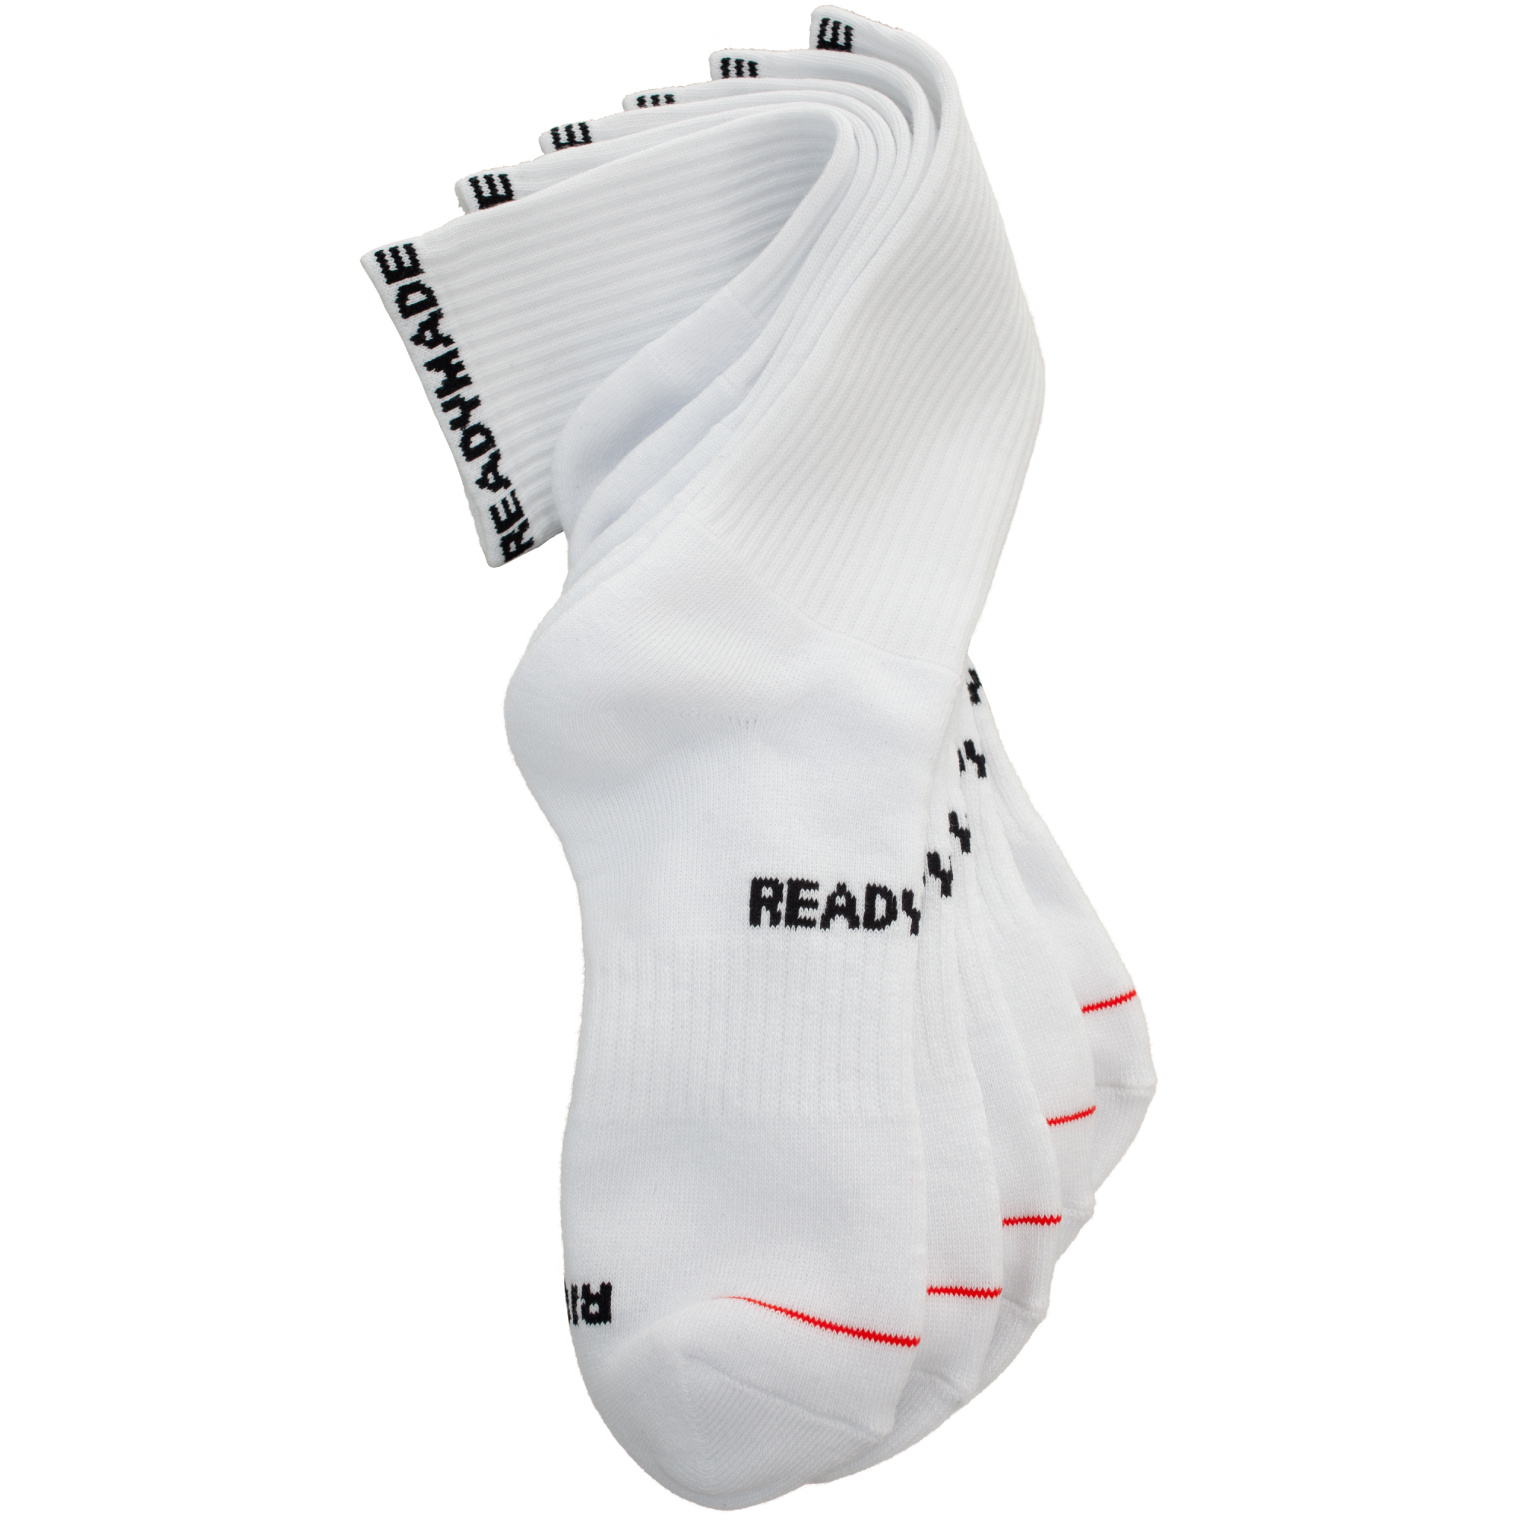 Readymade 3 pack logo socks